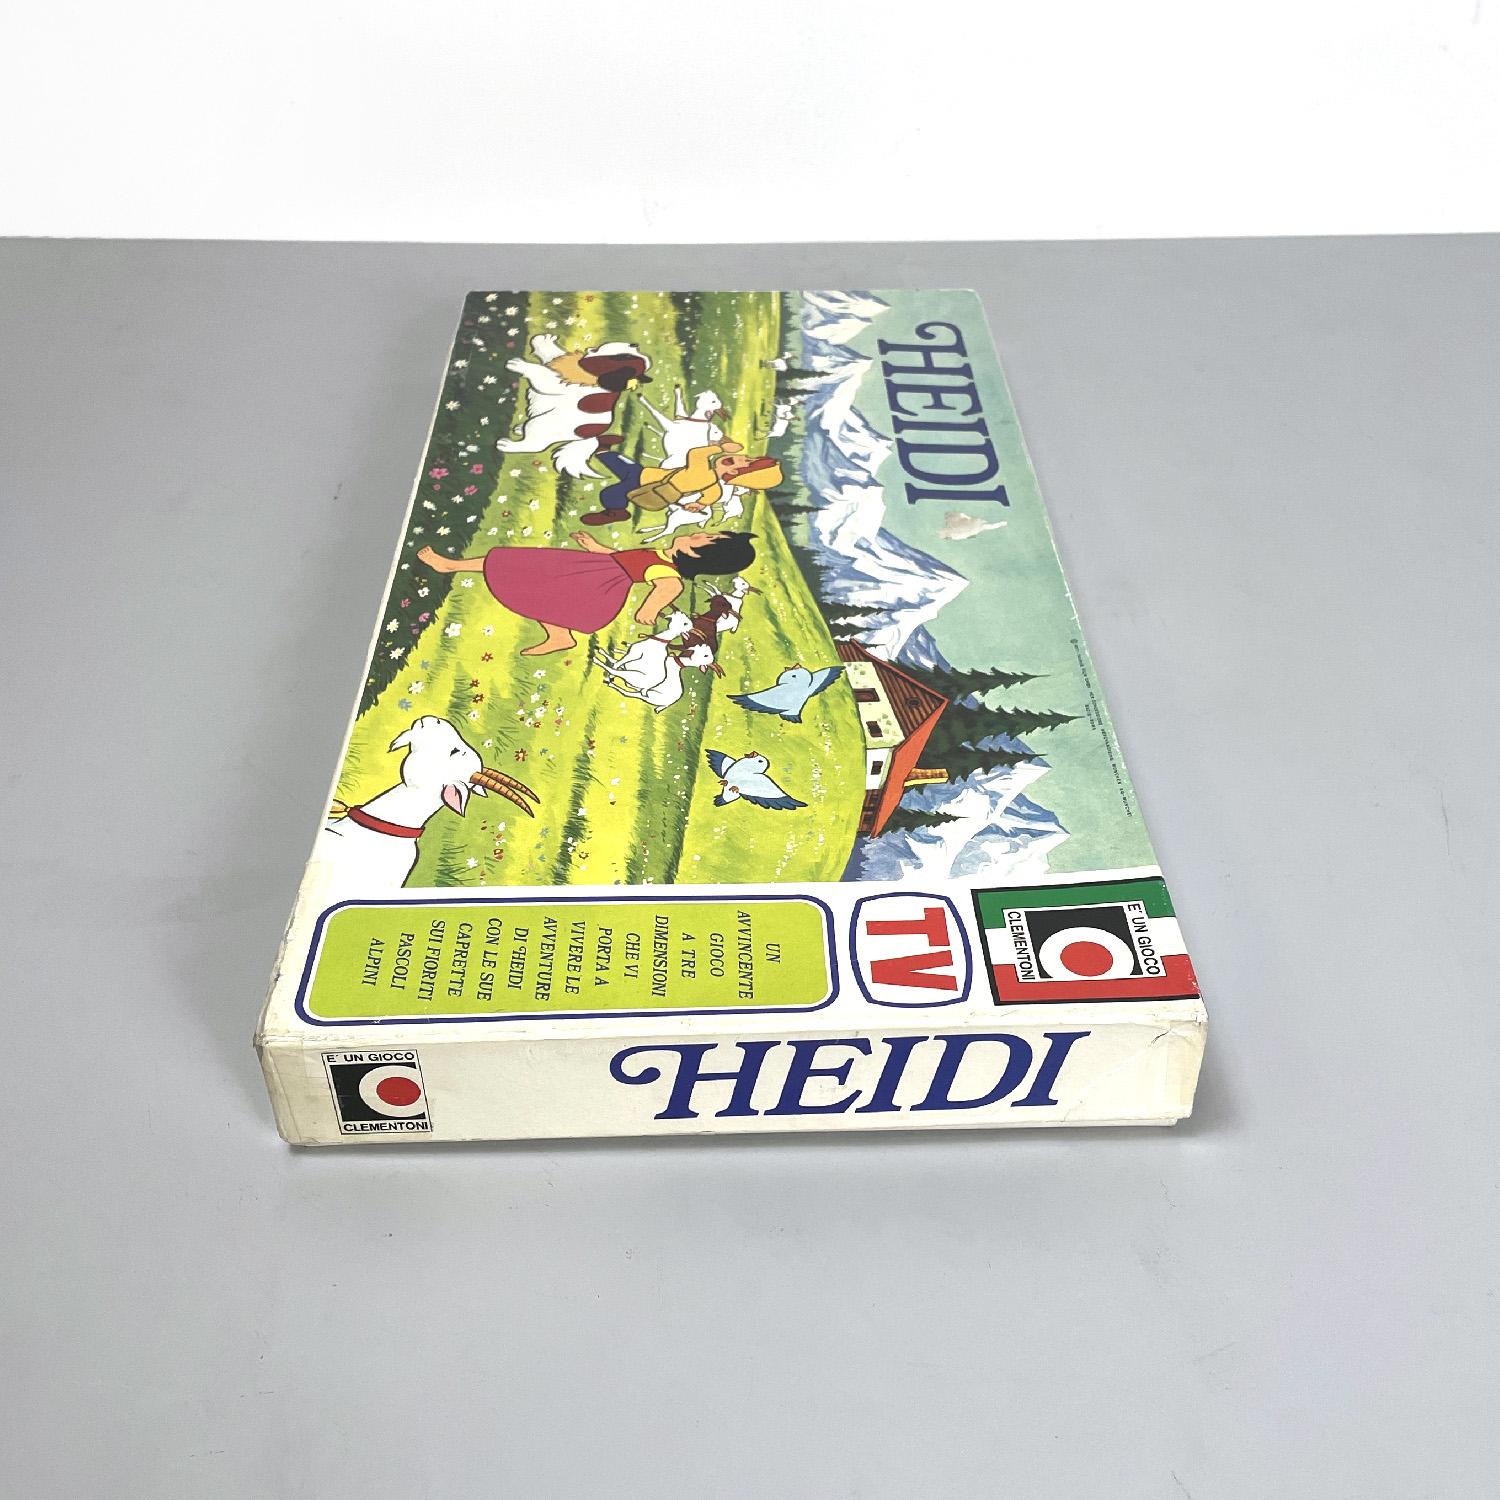 Italian modern Heidi board game by Clementoni, 1980s For Sale 2